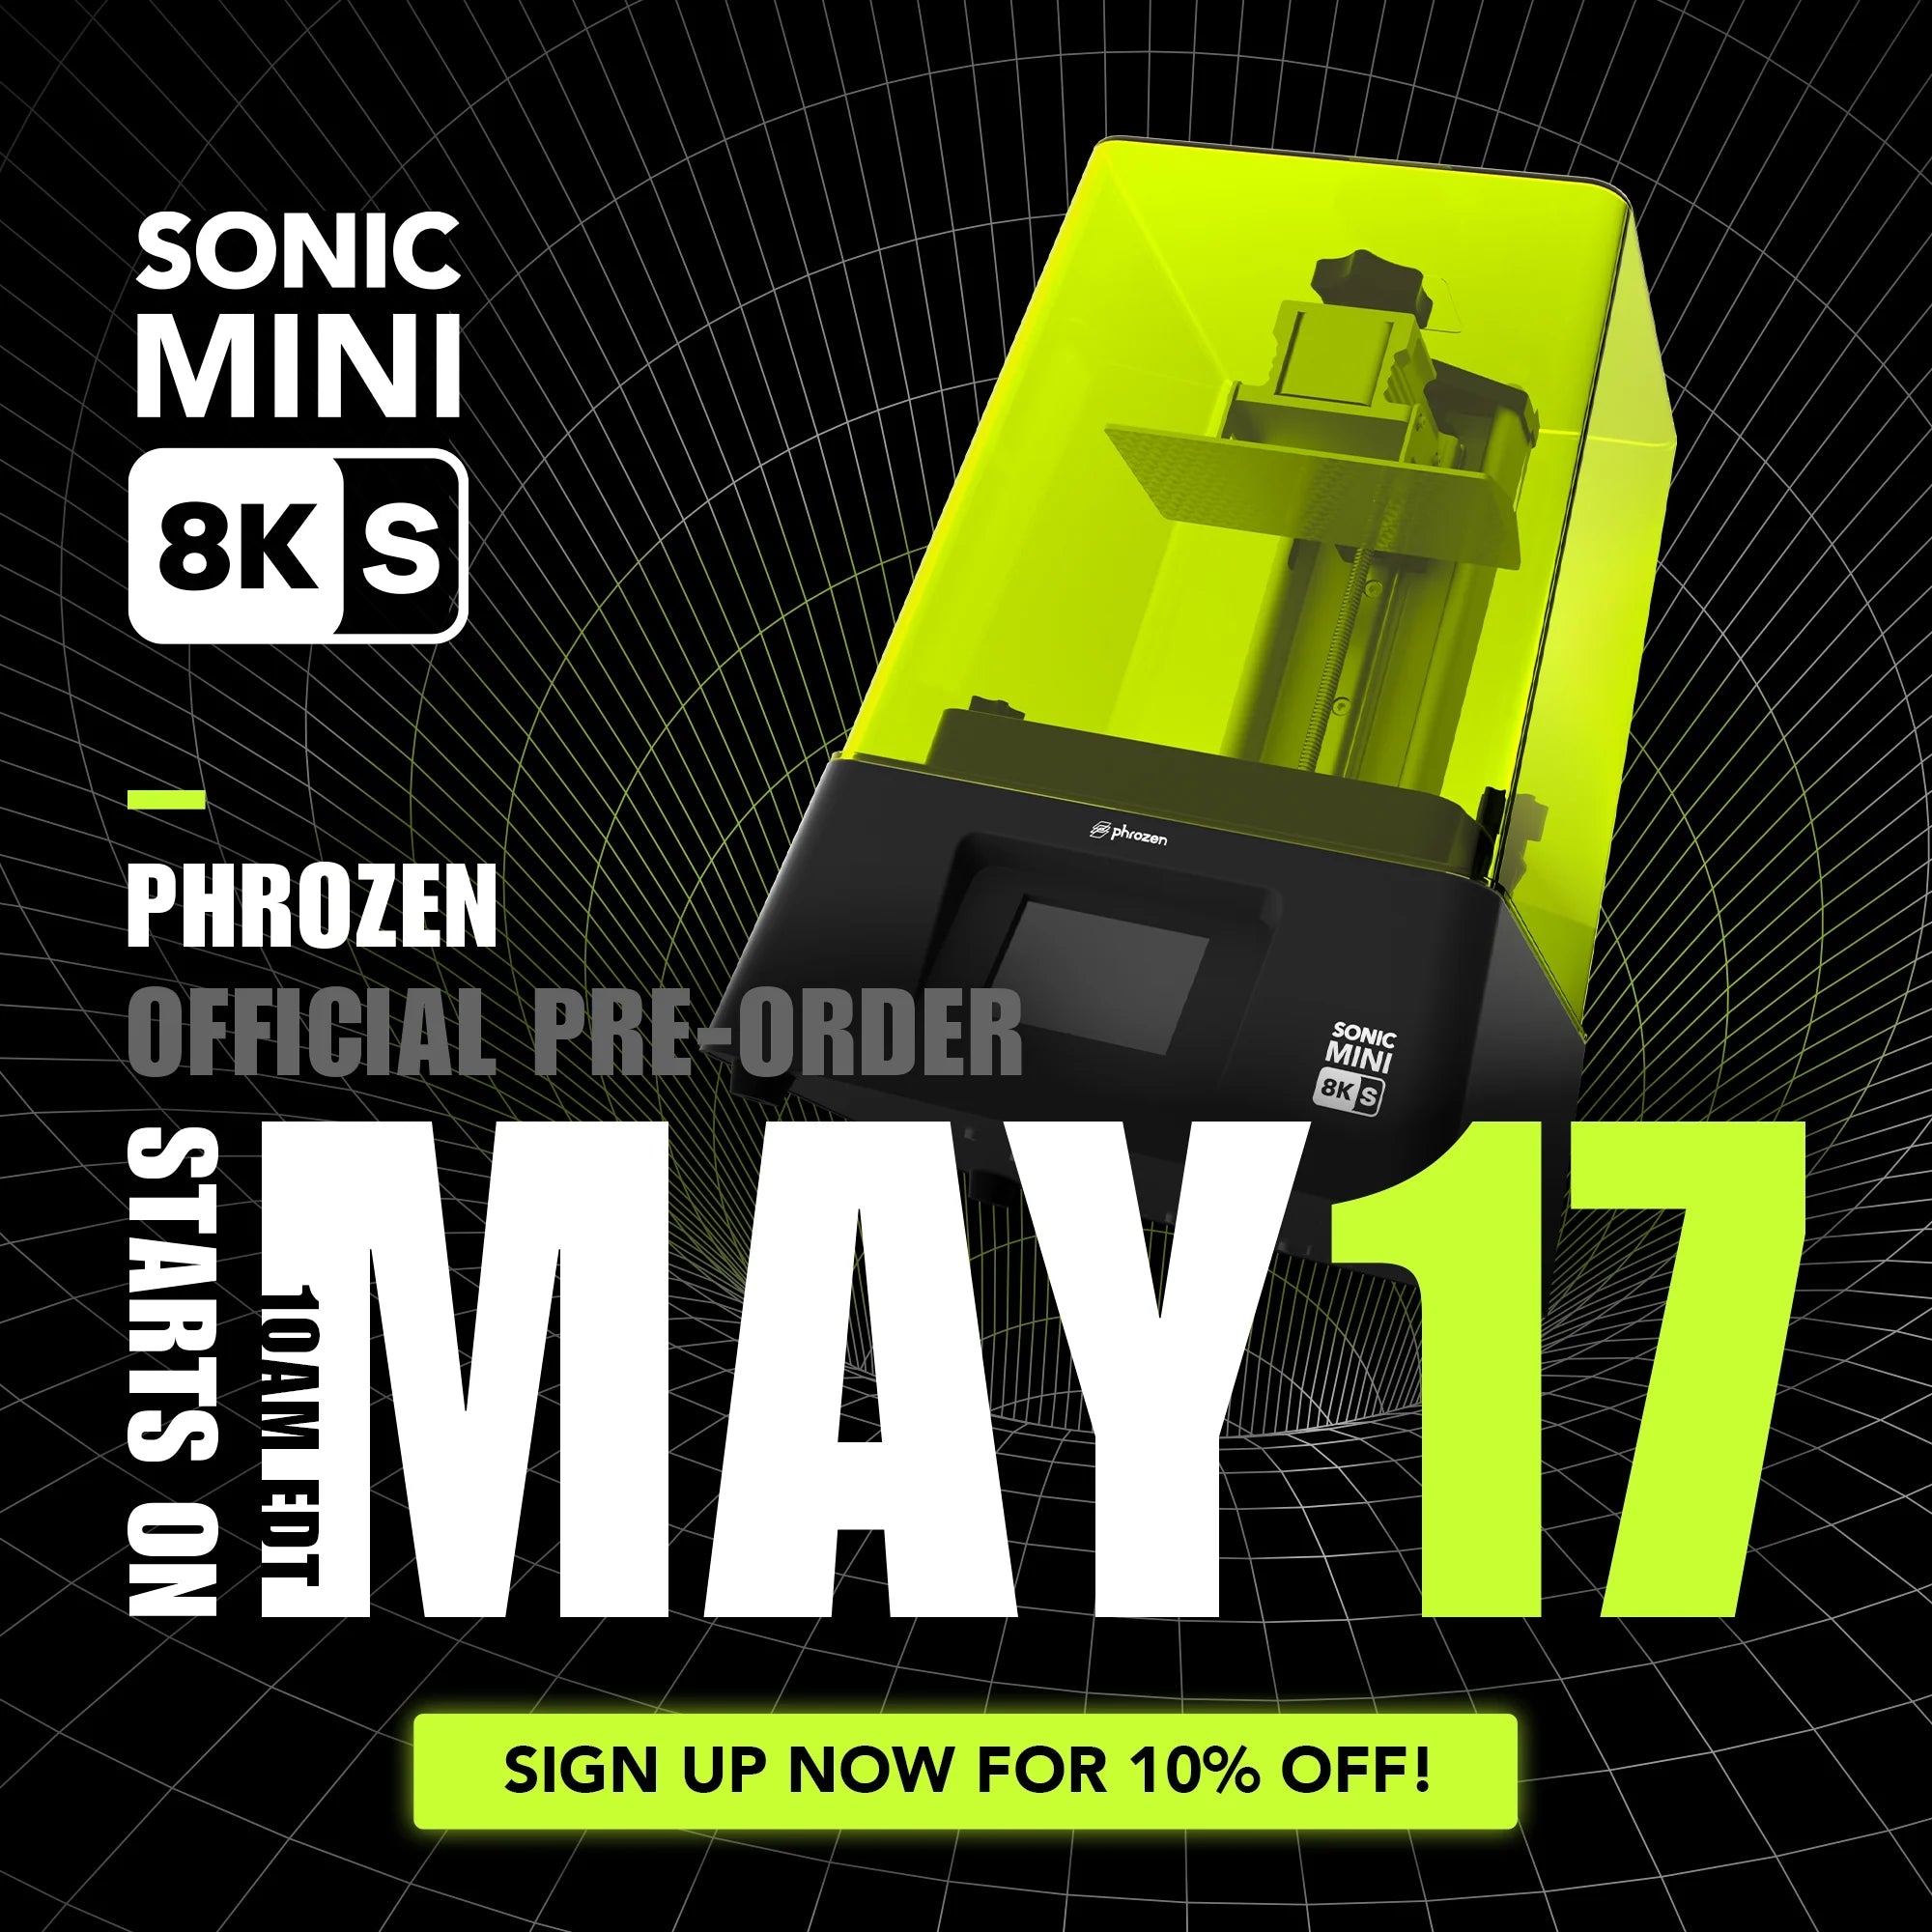 Sonic Mini 8K S 預購將於 5 月 17 日開始